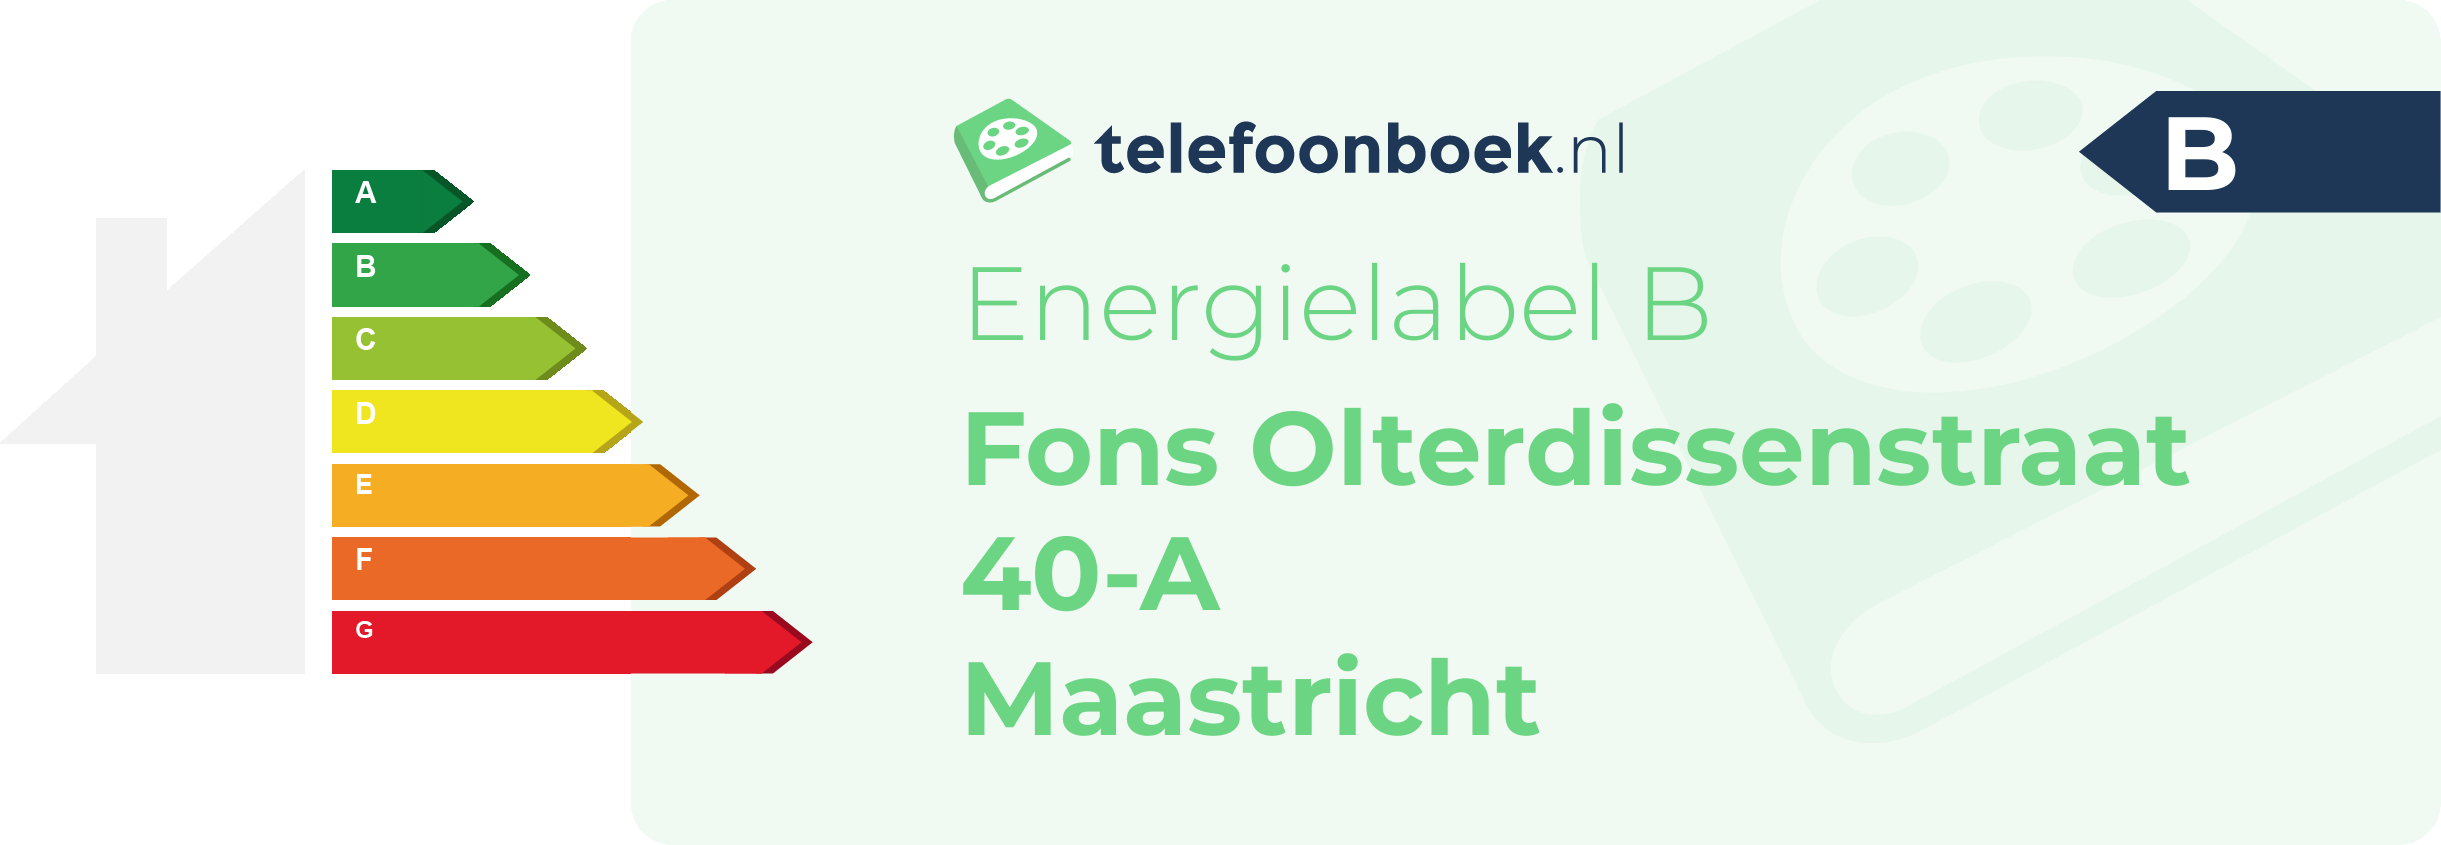 Energielabel Fons Olterdissenstraat 40-A Maastricht